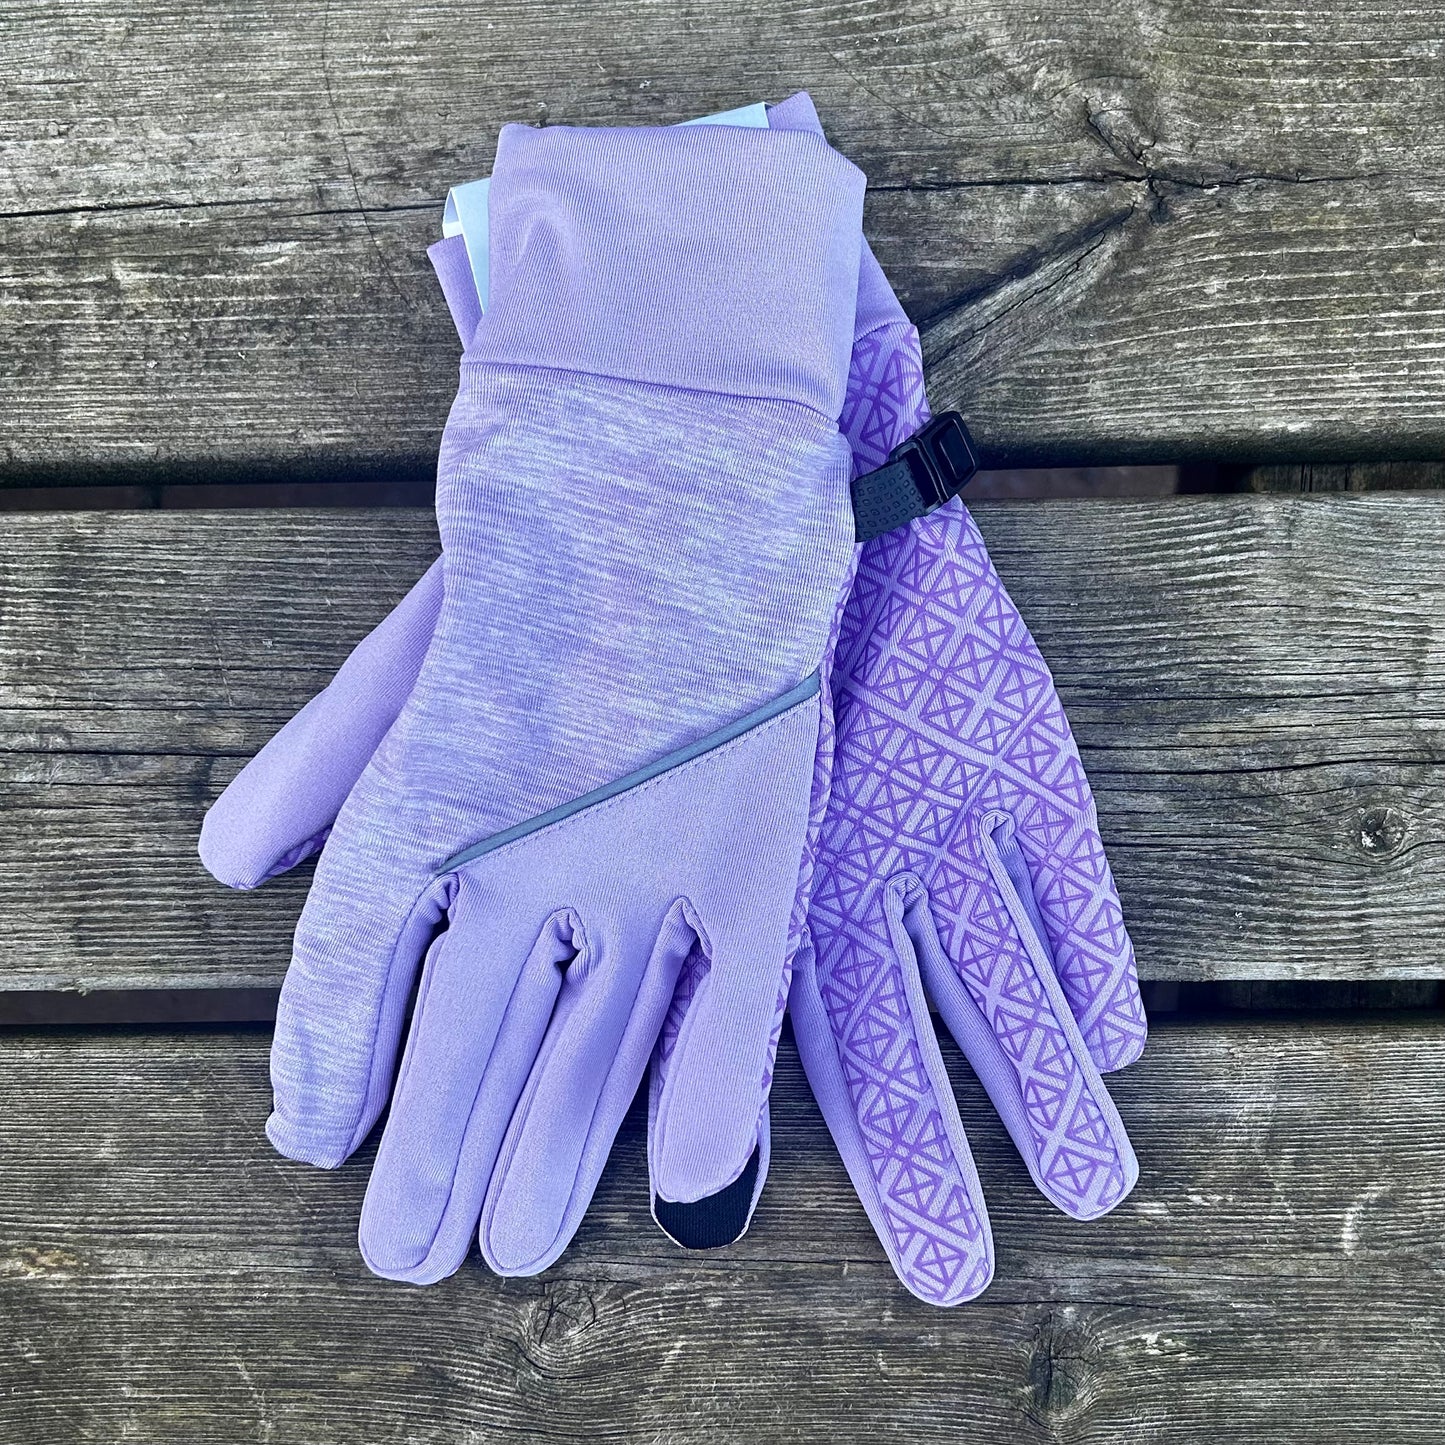 XS/S Gloves PURPLE Size 7